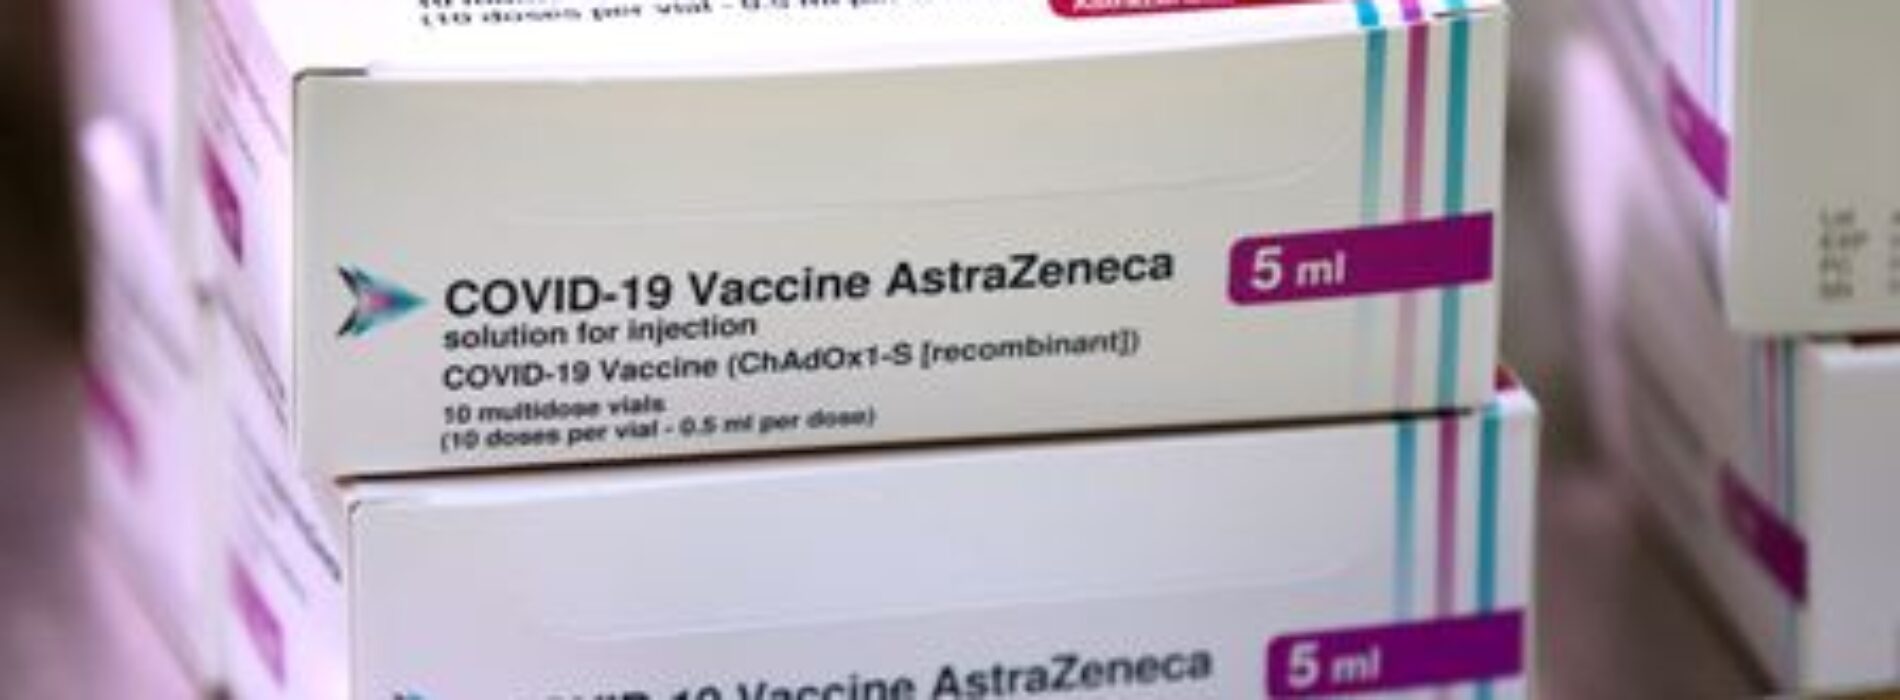 Nigeria to receive 16 million doses of  AstraZeneca COVID-19 vaccines